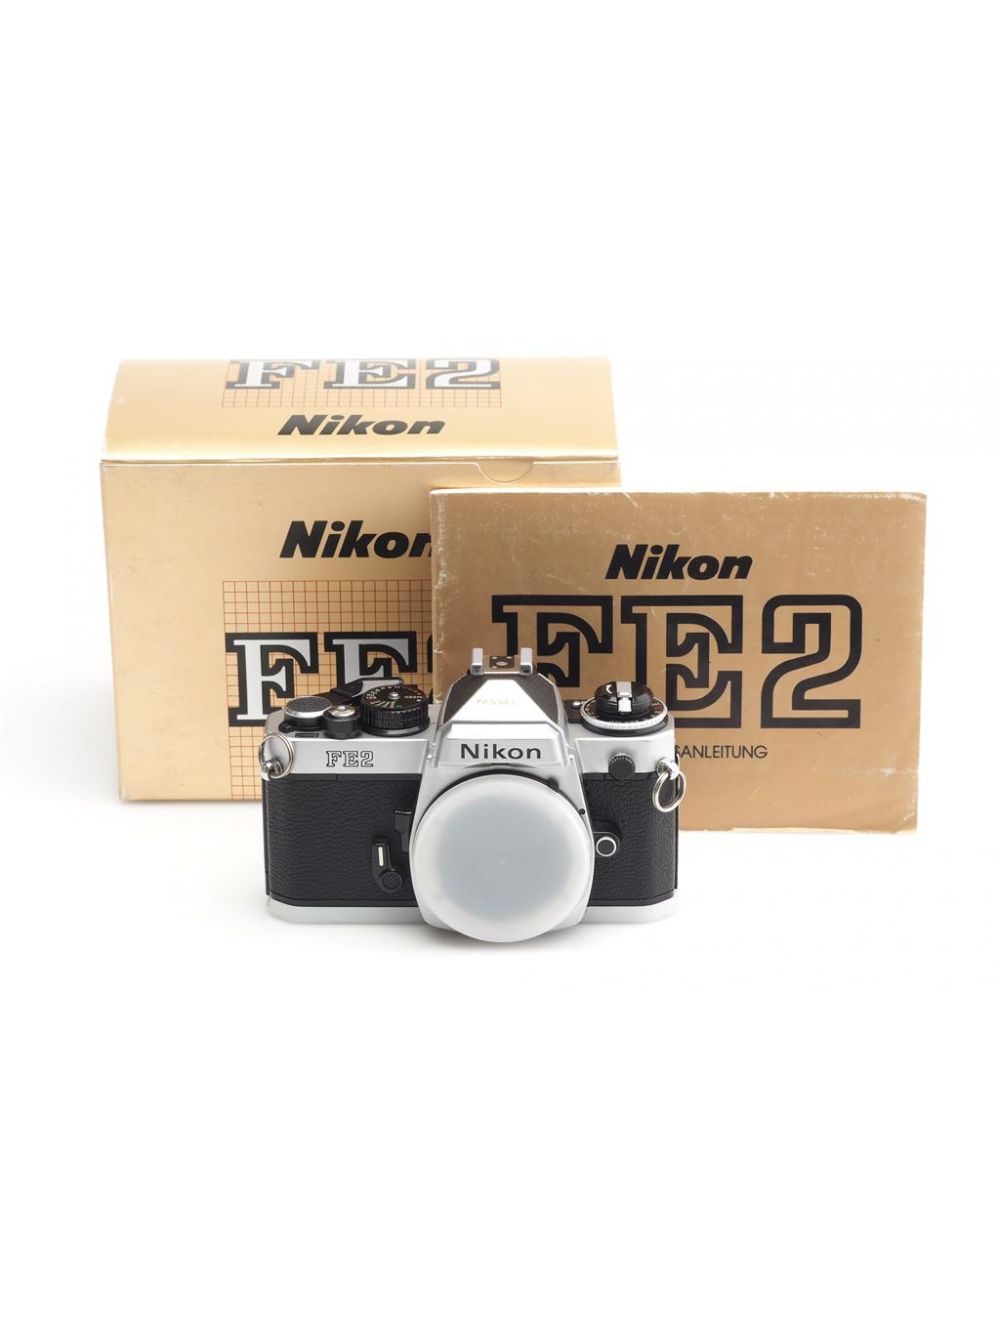 Nikon FE2 Chrome Body w. Box #2212789 | JO GEIER - MINT & RARE